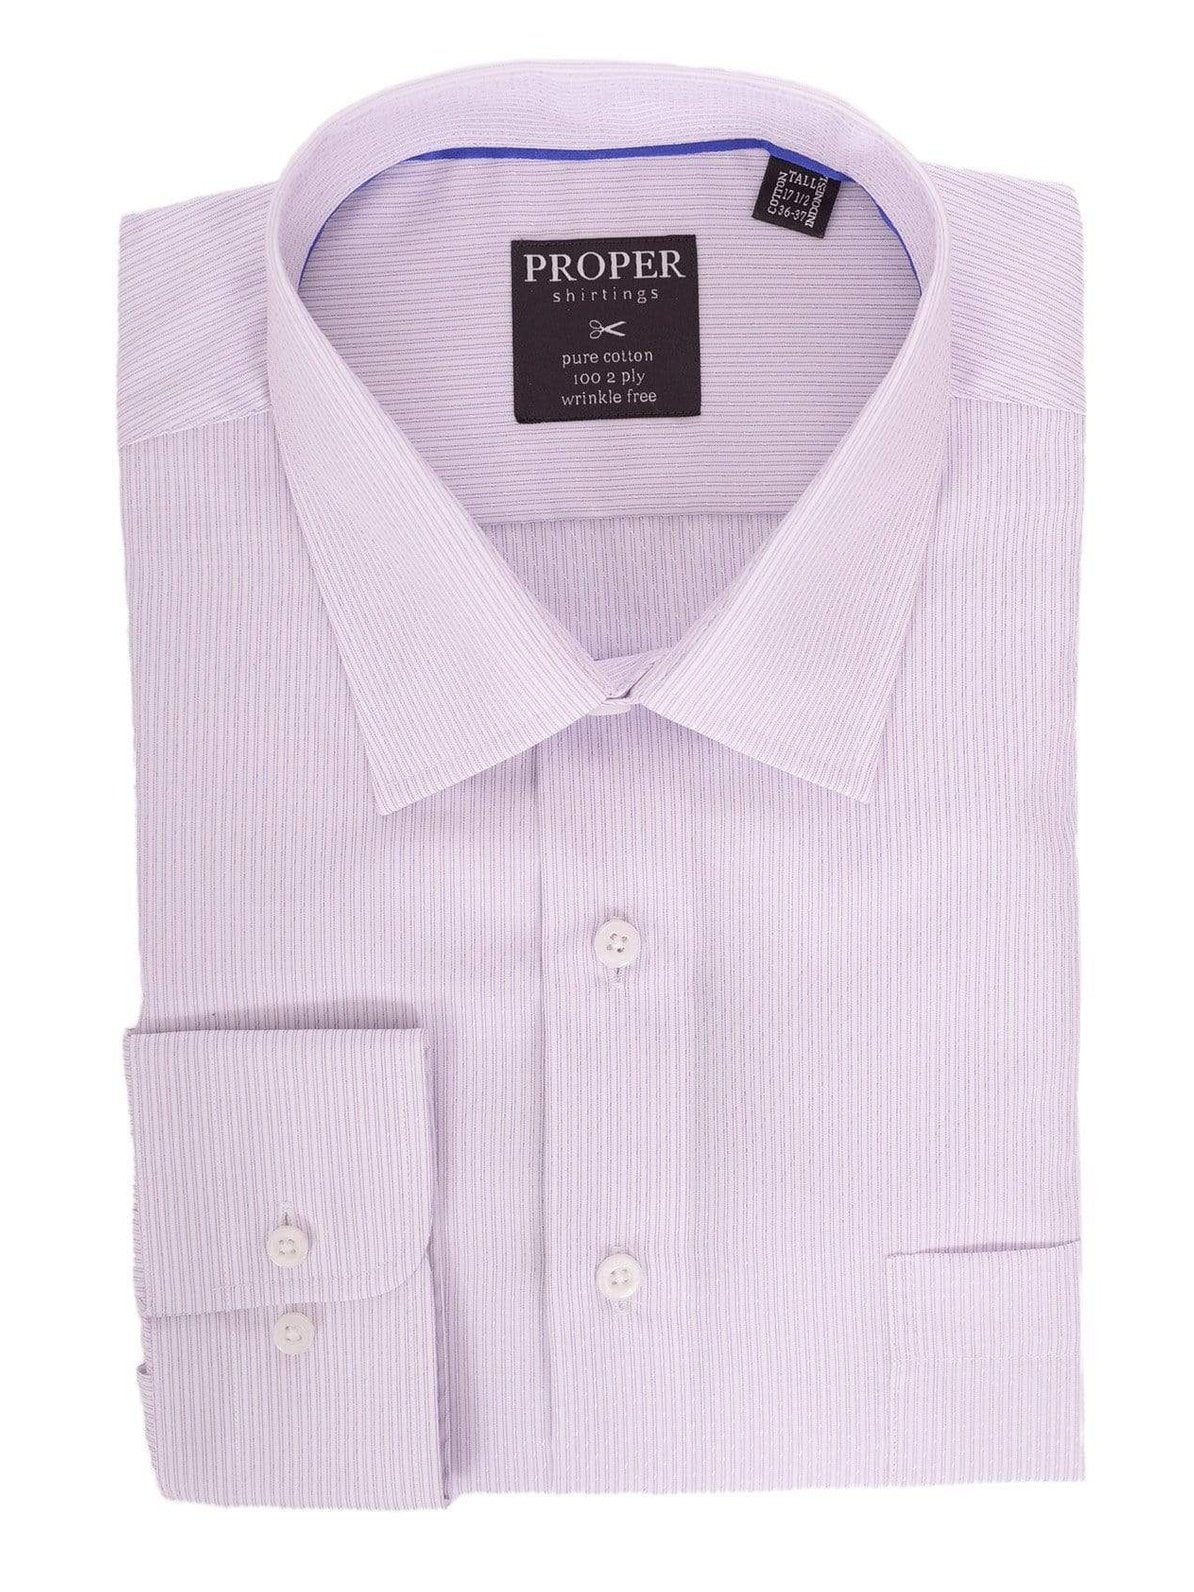 Proper Shirtings SHIRTS 16 34/35 Mens Purple Pinstriped Spread Collar 100 2 Ply Wrinkle Free Cotton Dress Shirt